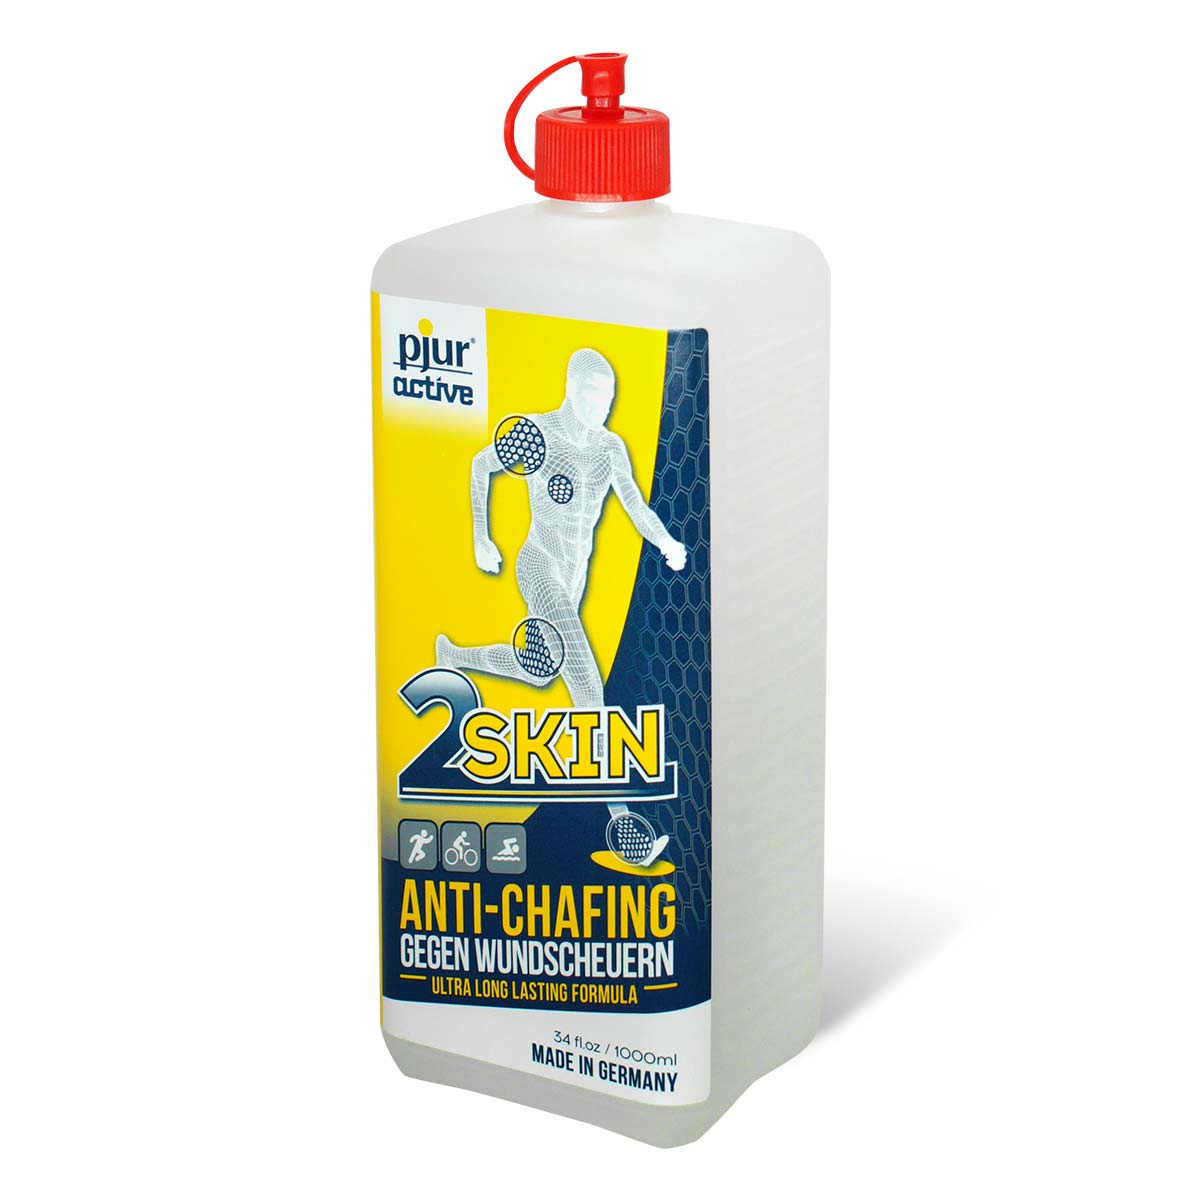 pjuractive 2skin ANTI-CHAFING GEL - 1000ml refill bottle - International Edition-p_1